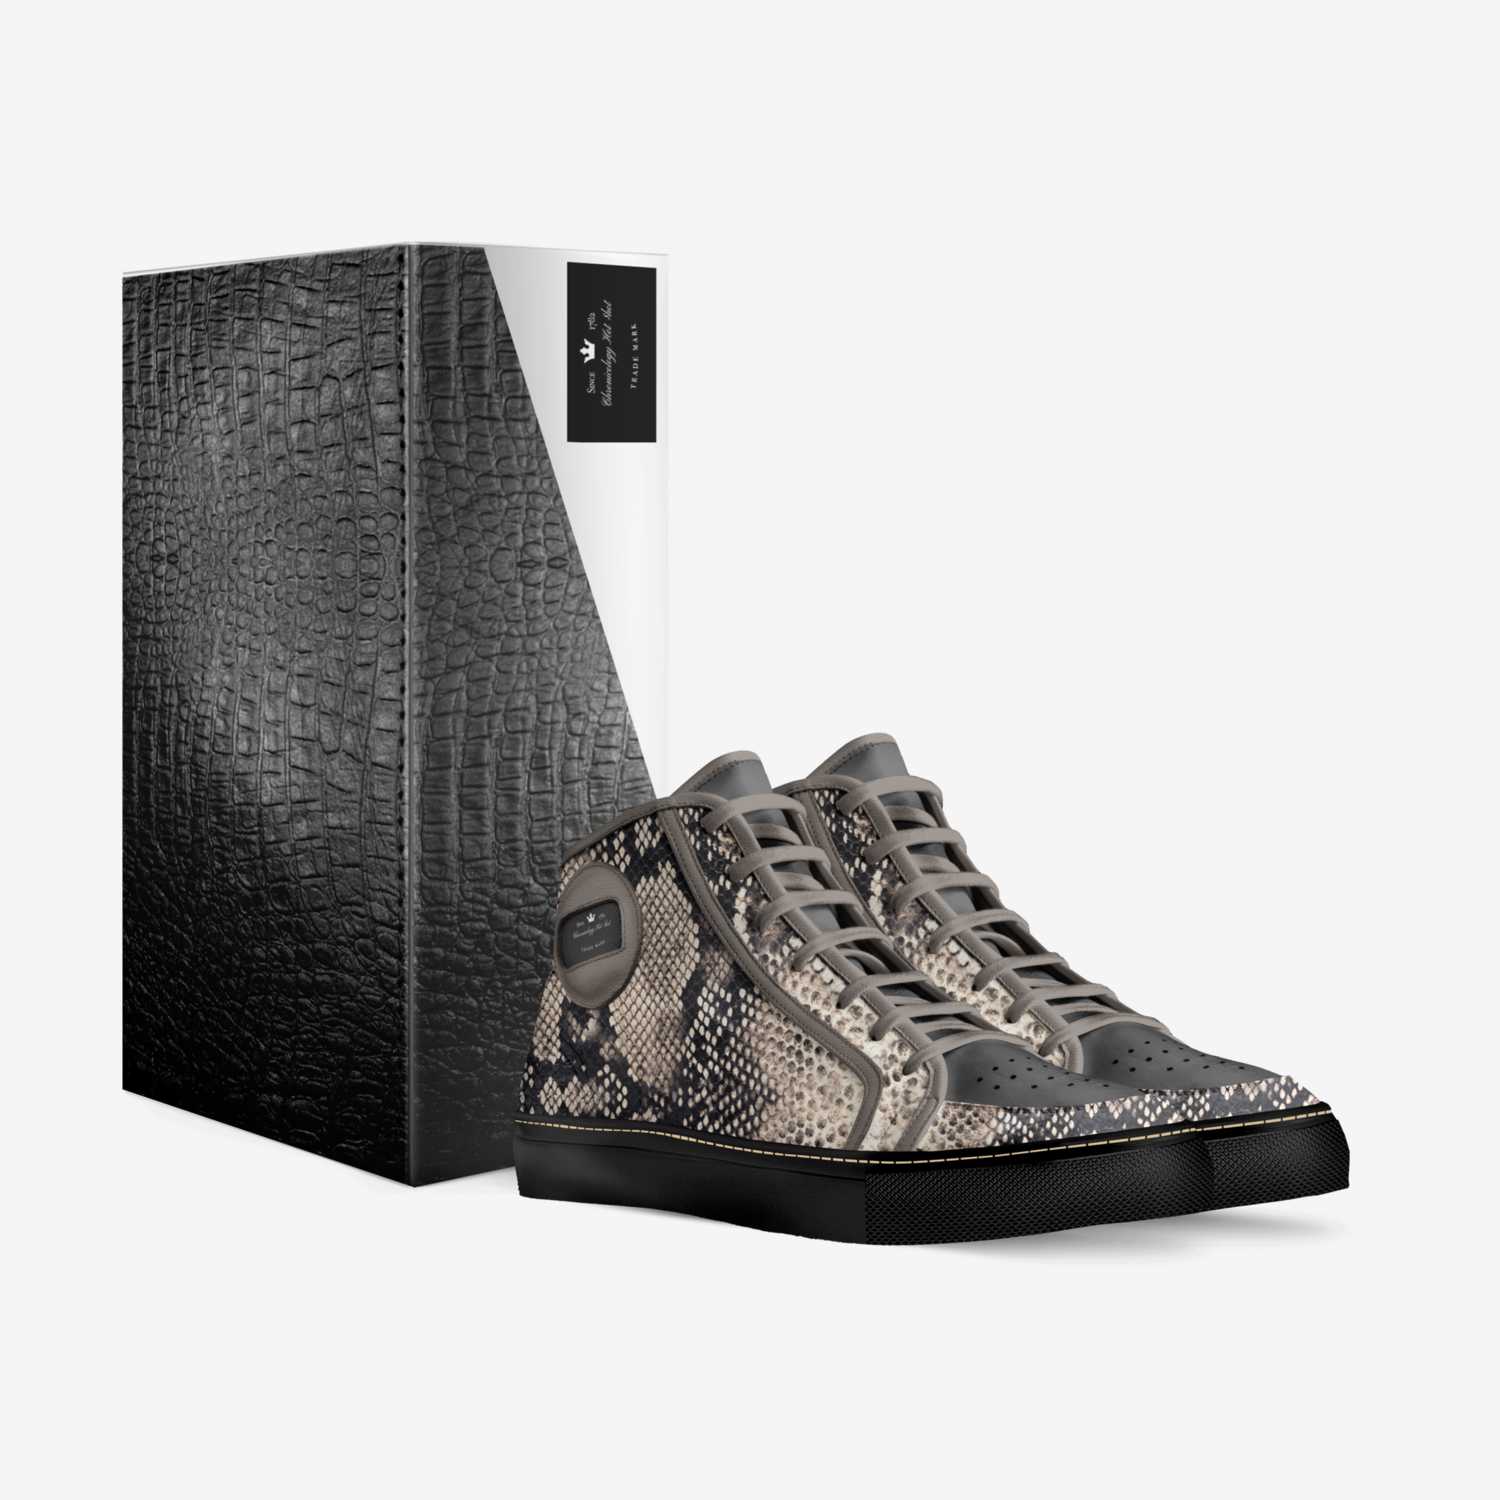 Chronicology Hot $ custom made in Italy shoes by Indigo Blues Ways | Box view